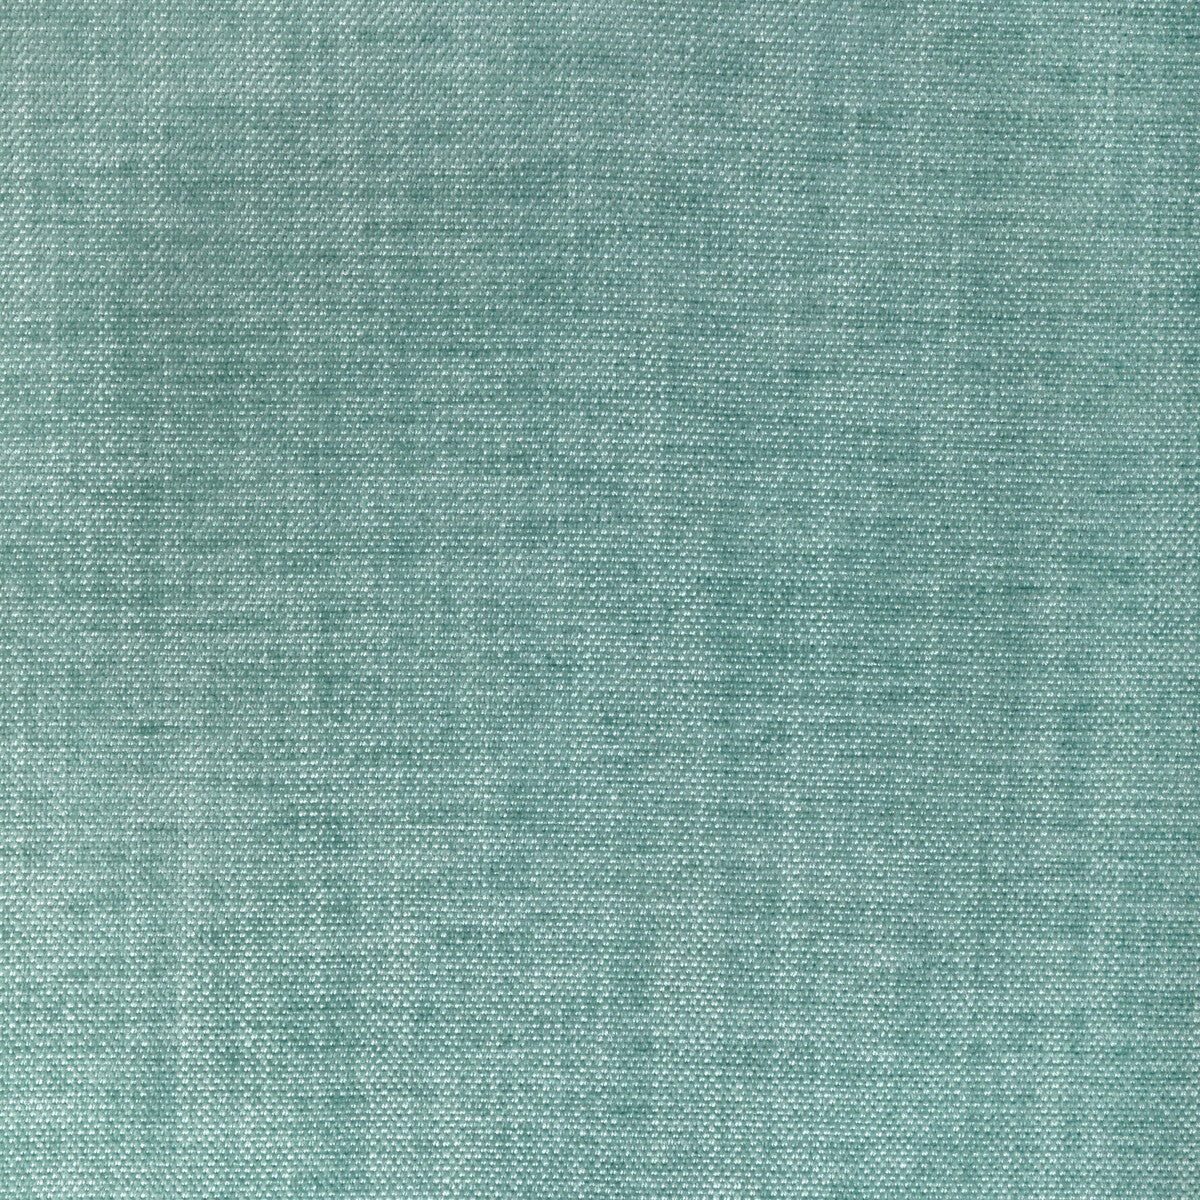 Kravet Smart fabric in 36650-13 color - pattern 36650.13.0 - by Kravet Smart in the Performance Kravetarmor collection